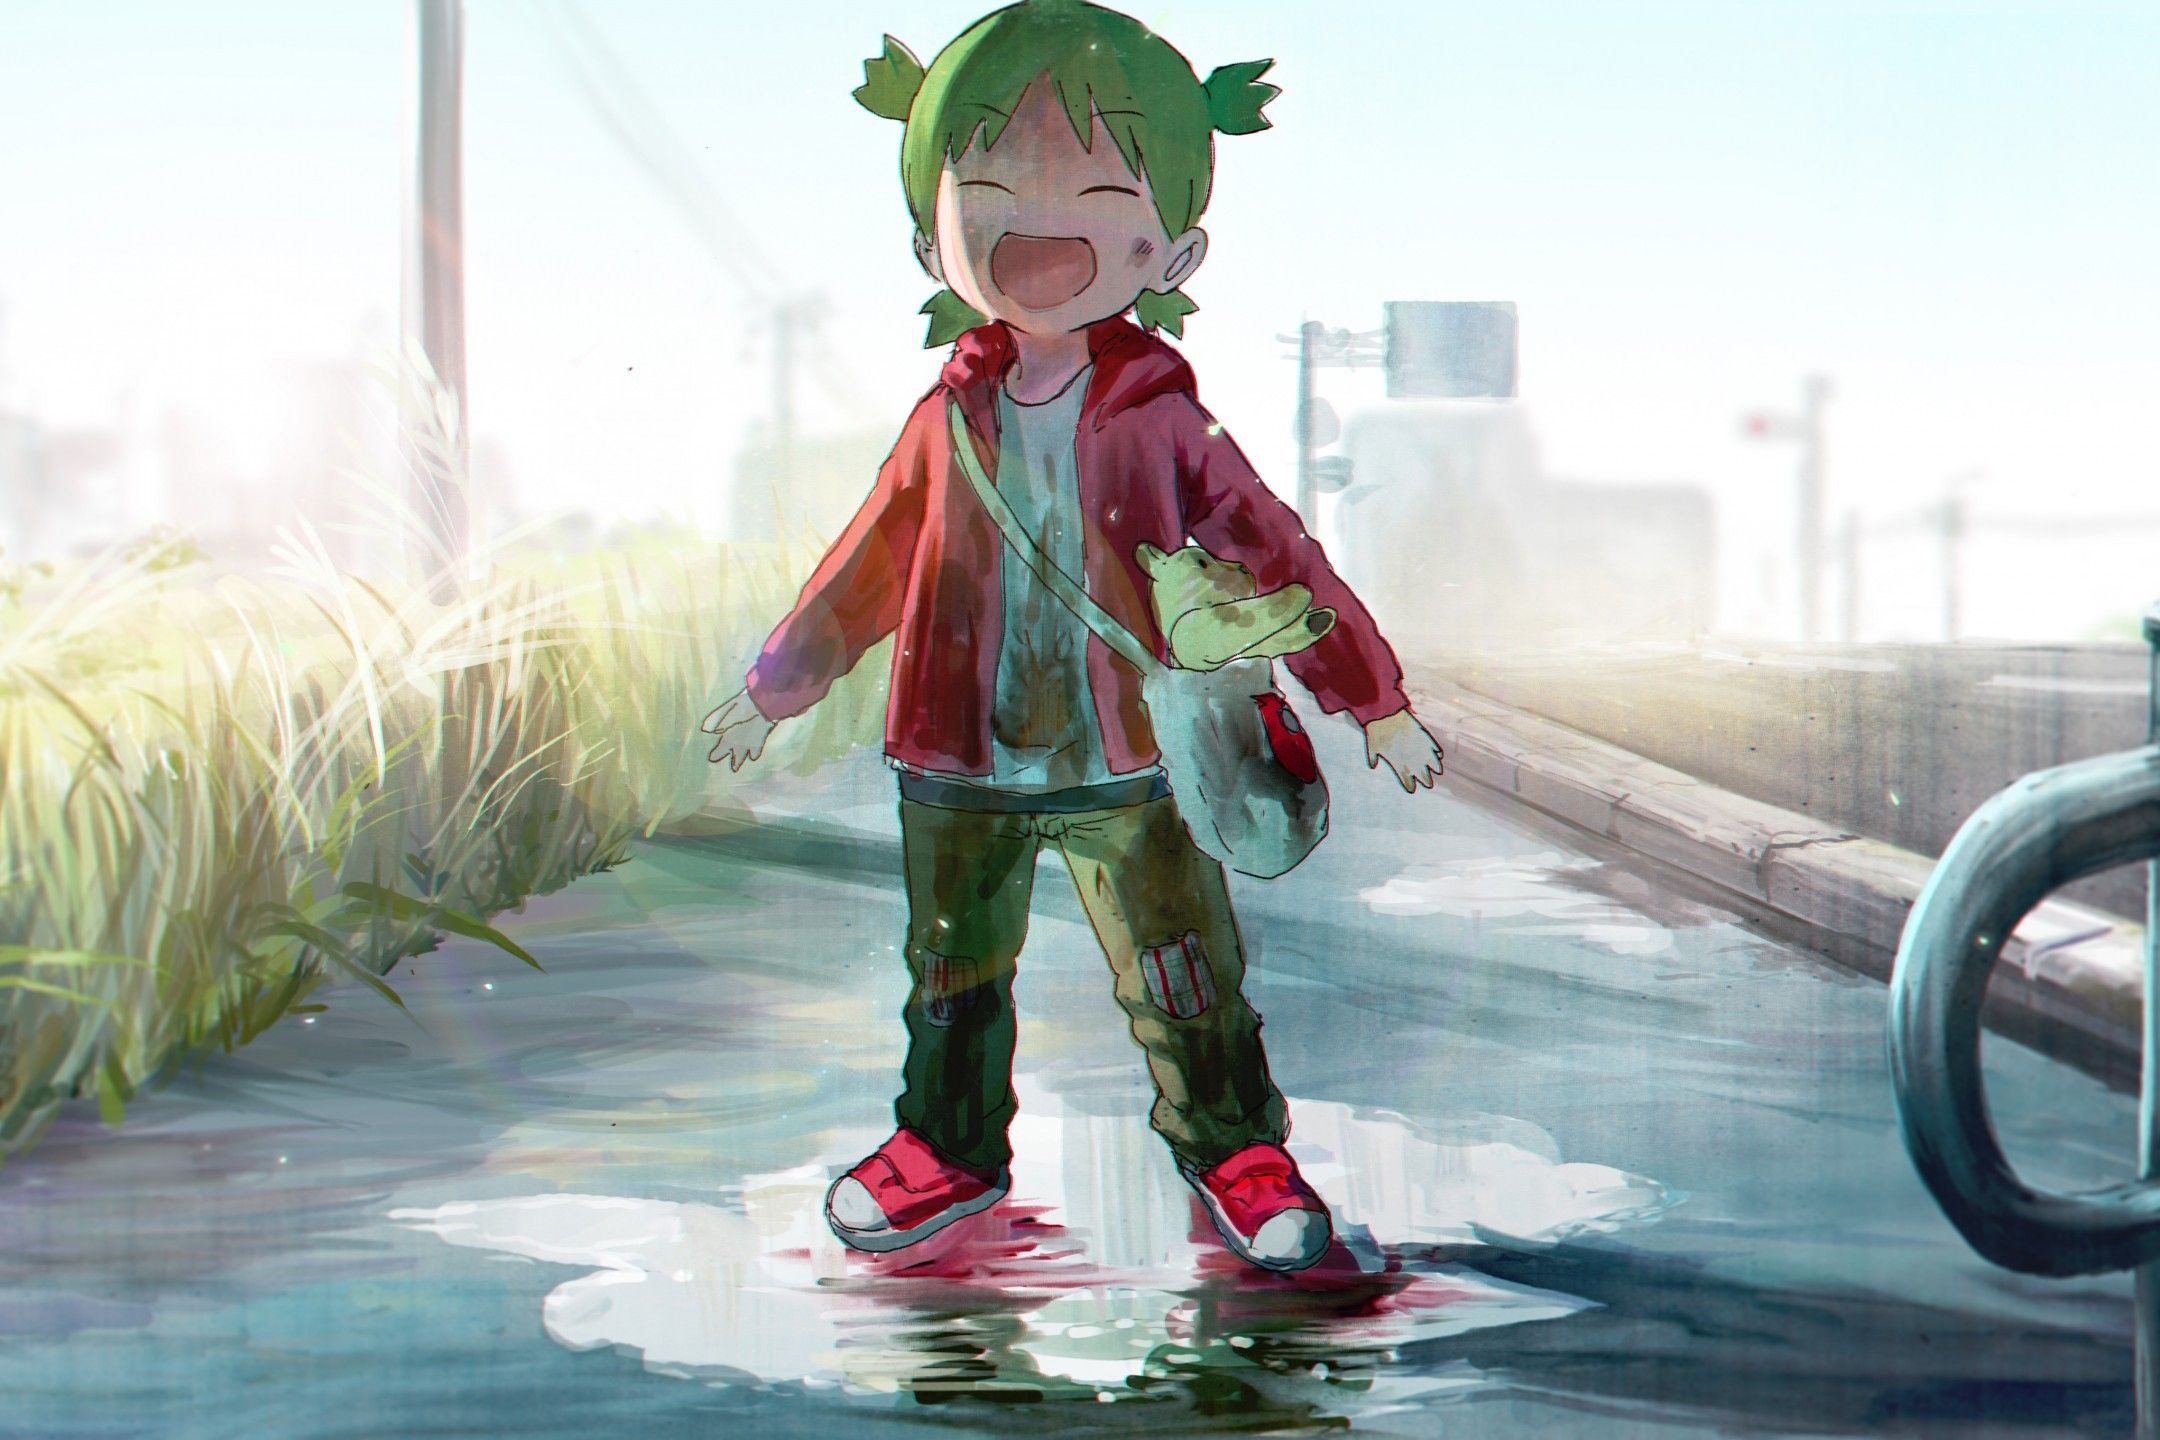 Download 2160x1440 Yotsuba Koiwai, Green Hair, Cute, Smiling, Anime Kid Wallpaper